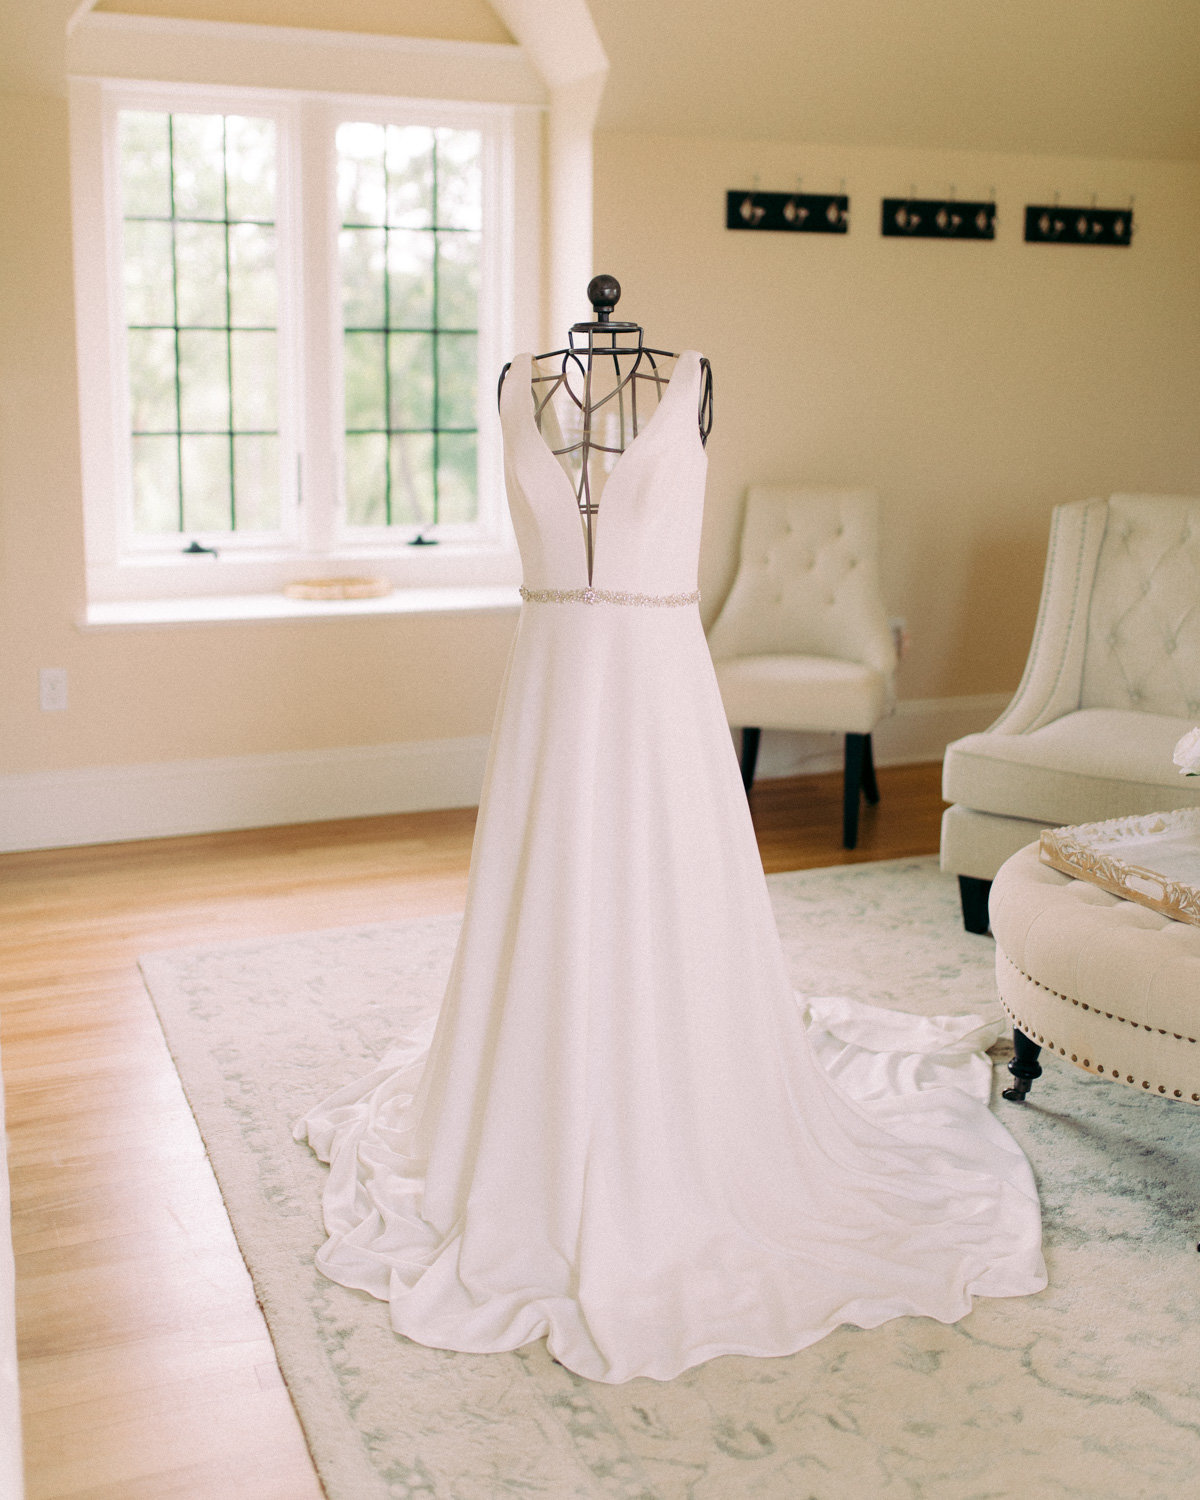 Renne Austin Bridal Wedding Dress on Mannequin in Venue3two Bridal Suite